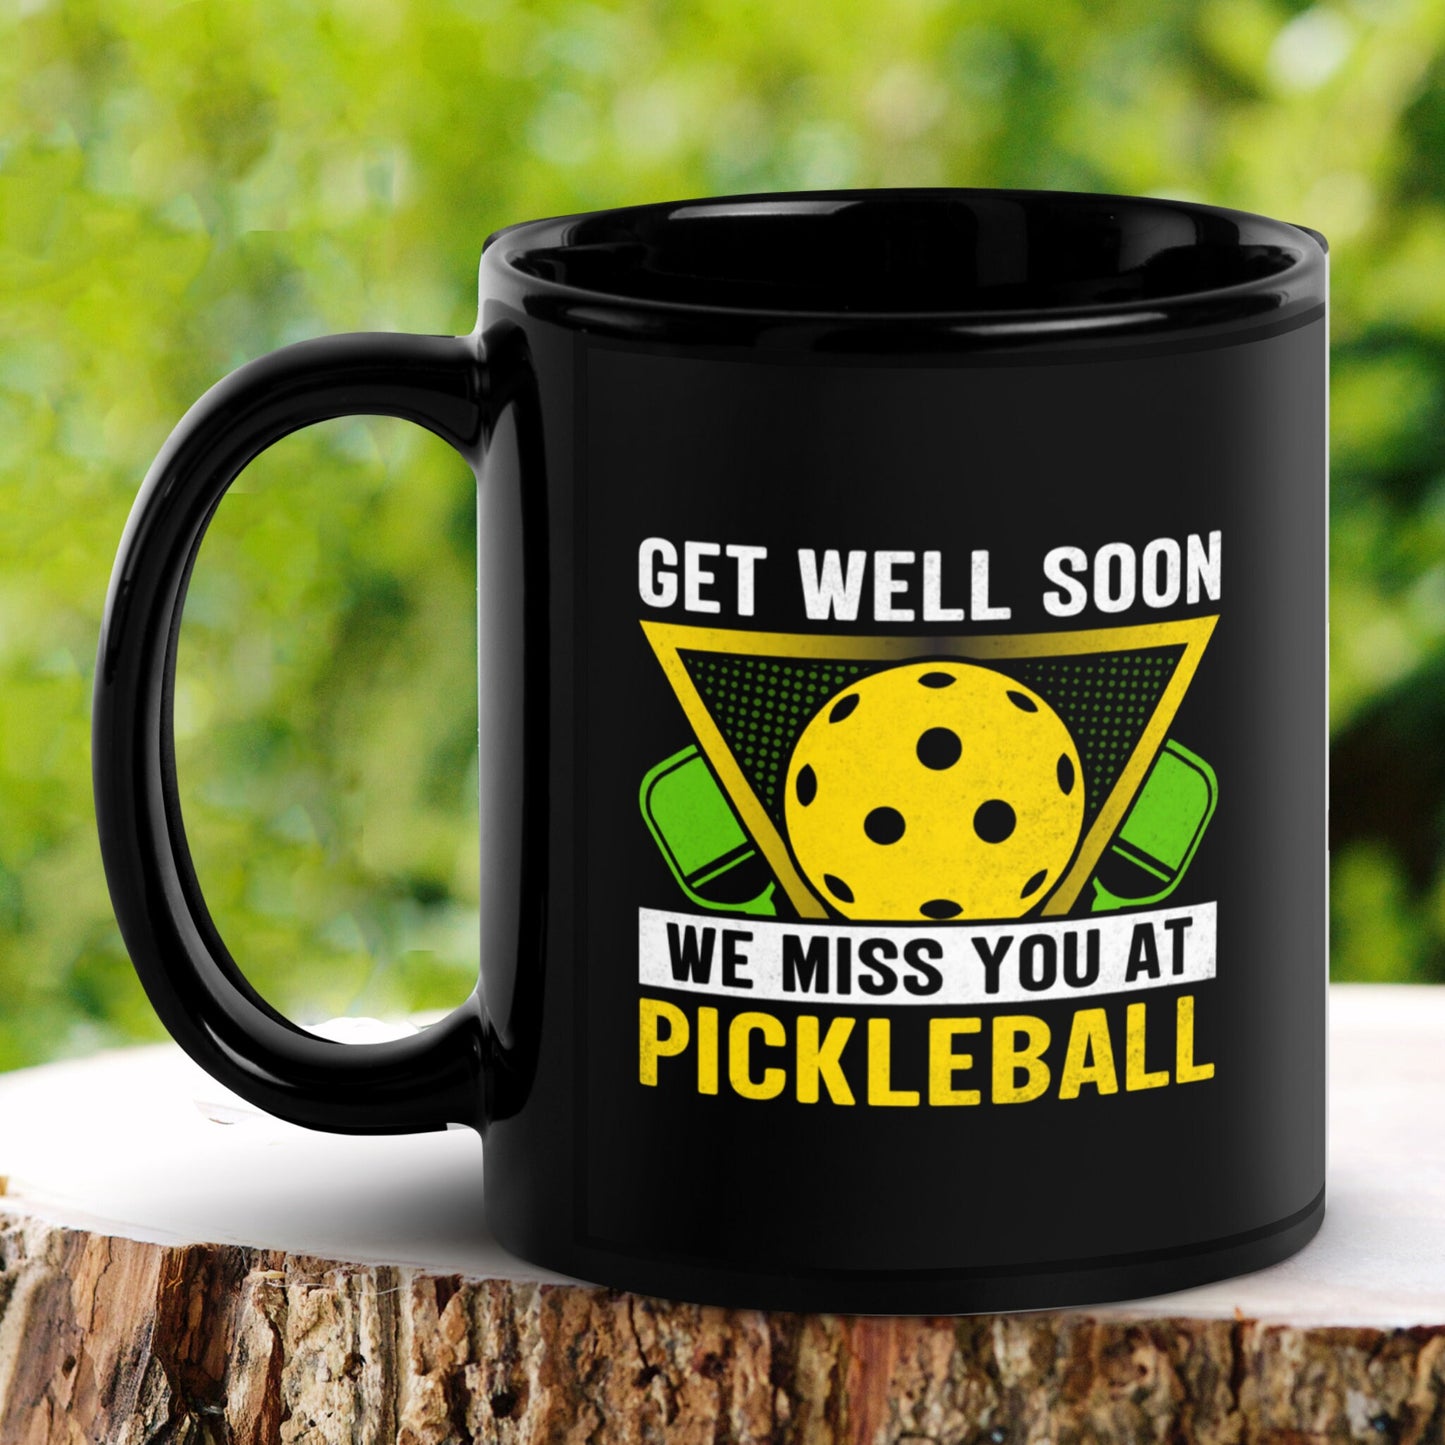 Get Well Soon Mug, We Miss You at Pickleball Mug - Zehnaria - HOBBIES & TRAVEL - Mugs